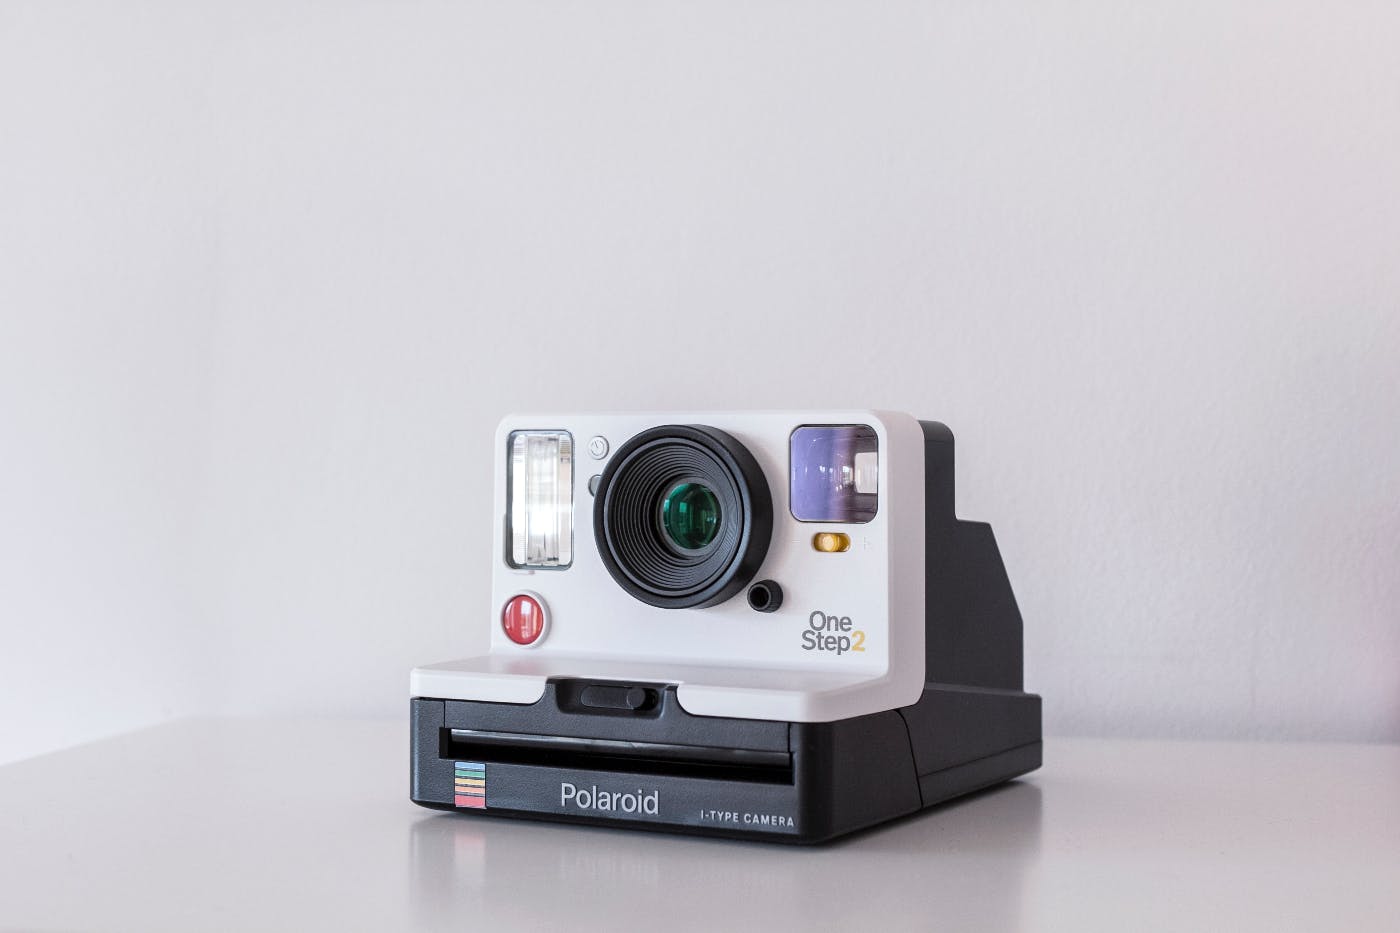 A white and black Polaroid One Step2 camera